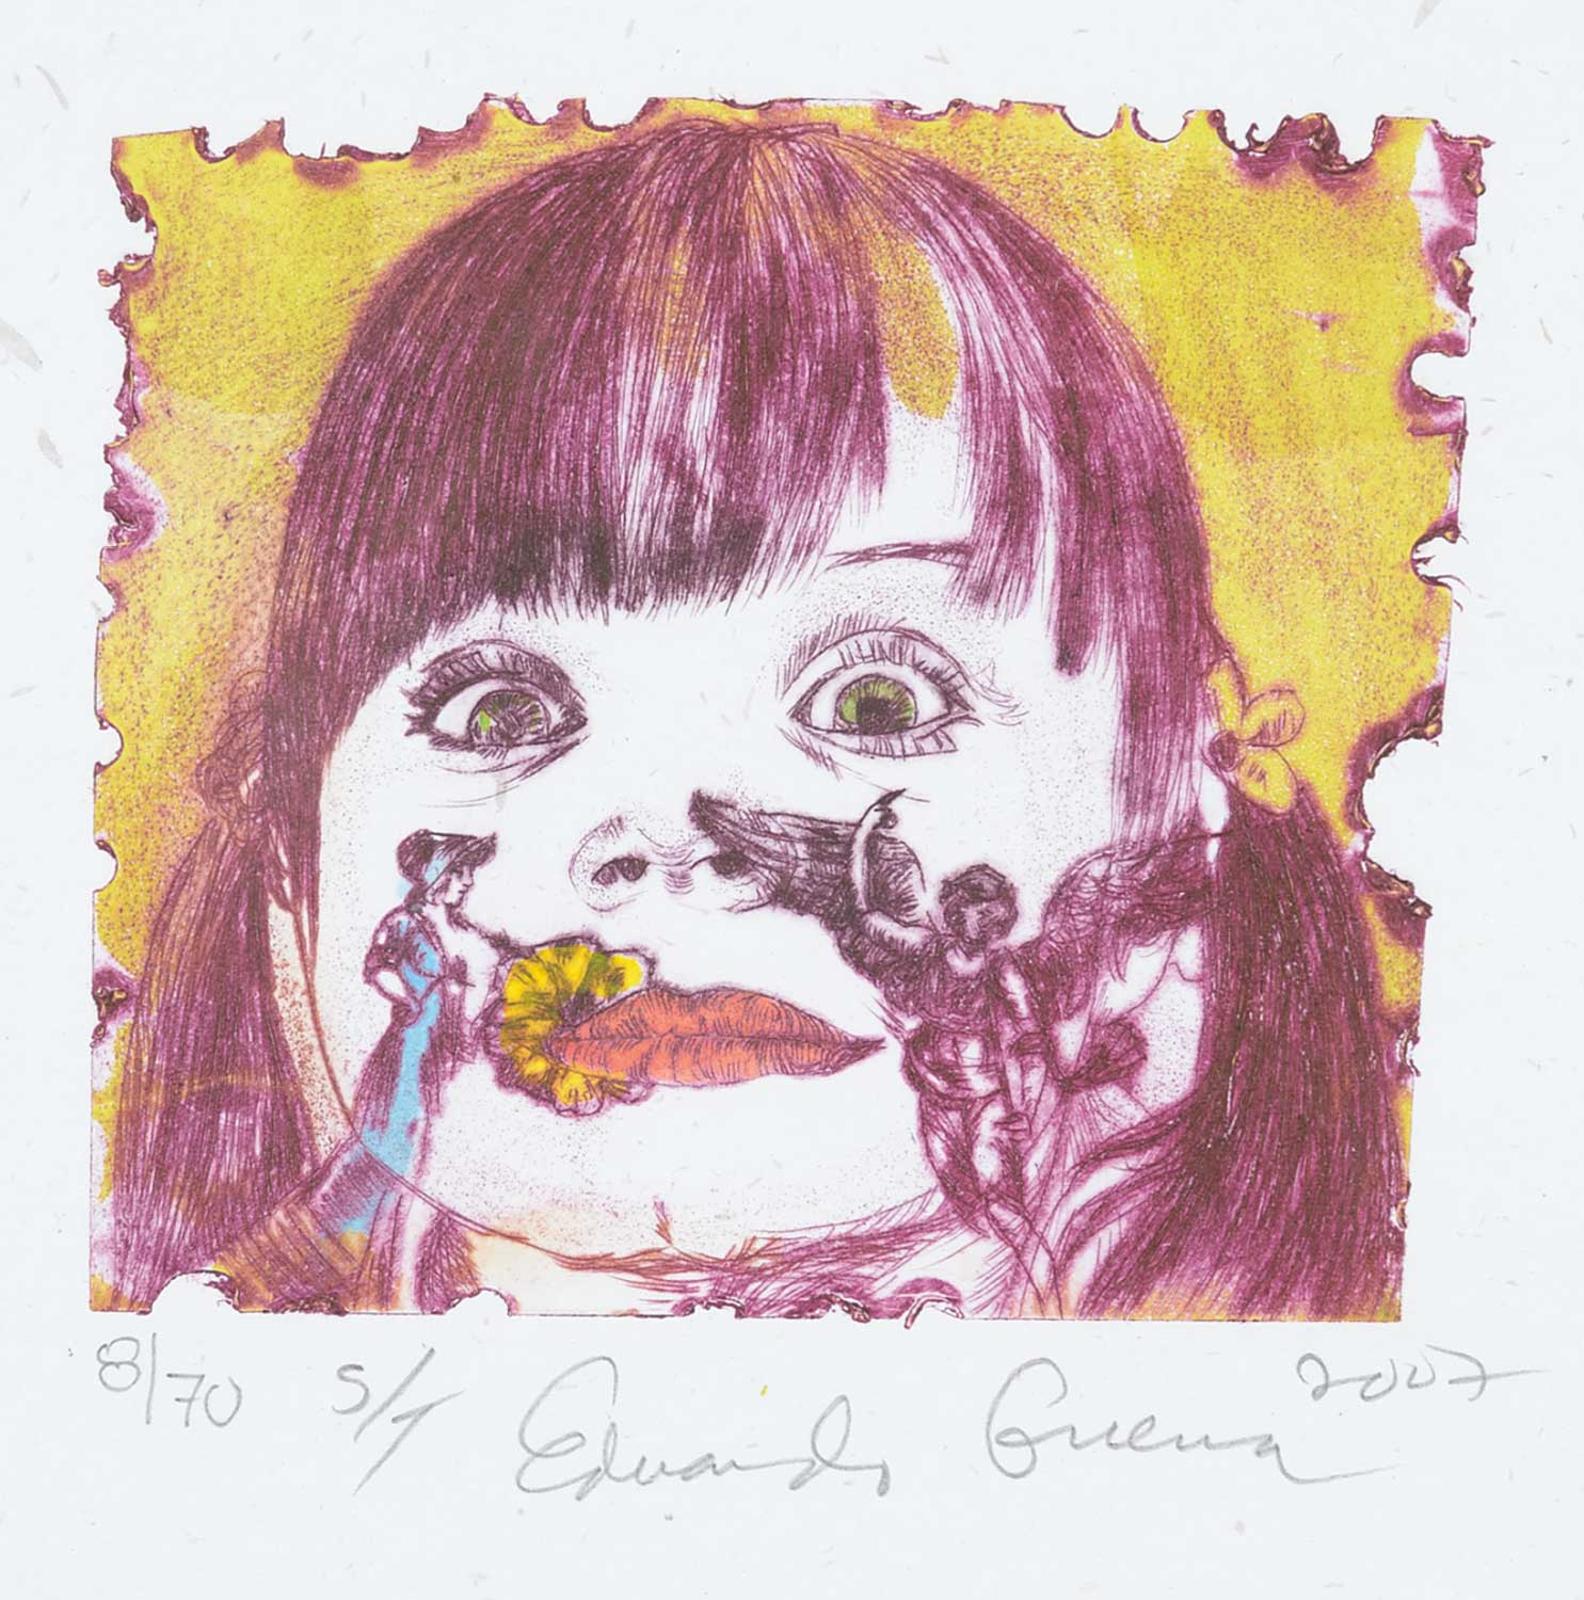 Edwardo Guena - Untitled - Mystical Girl  #8/70